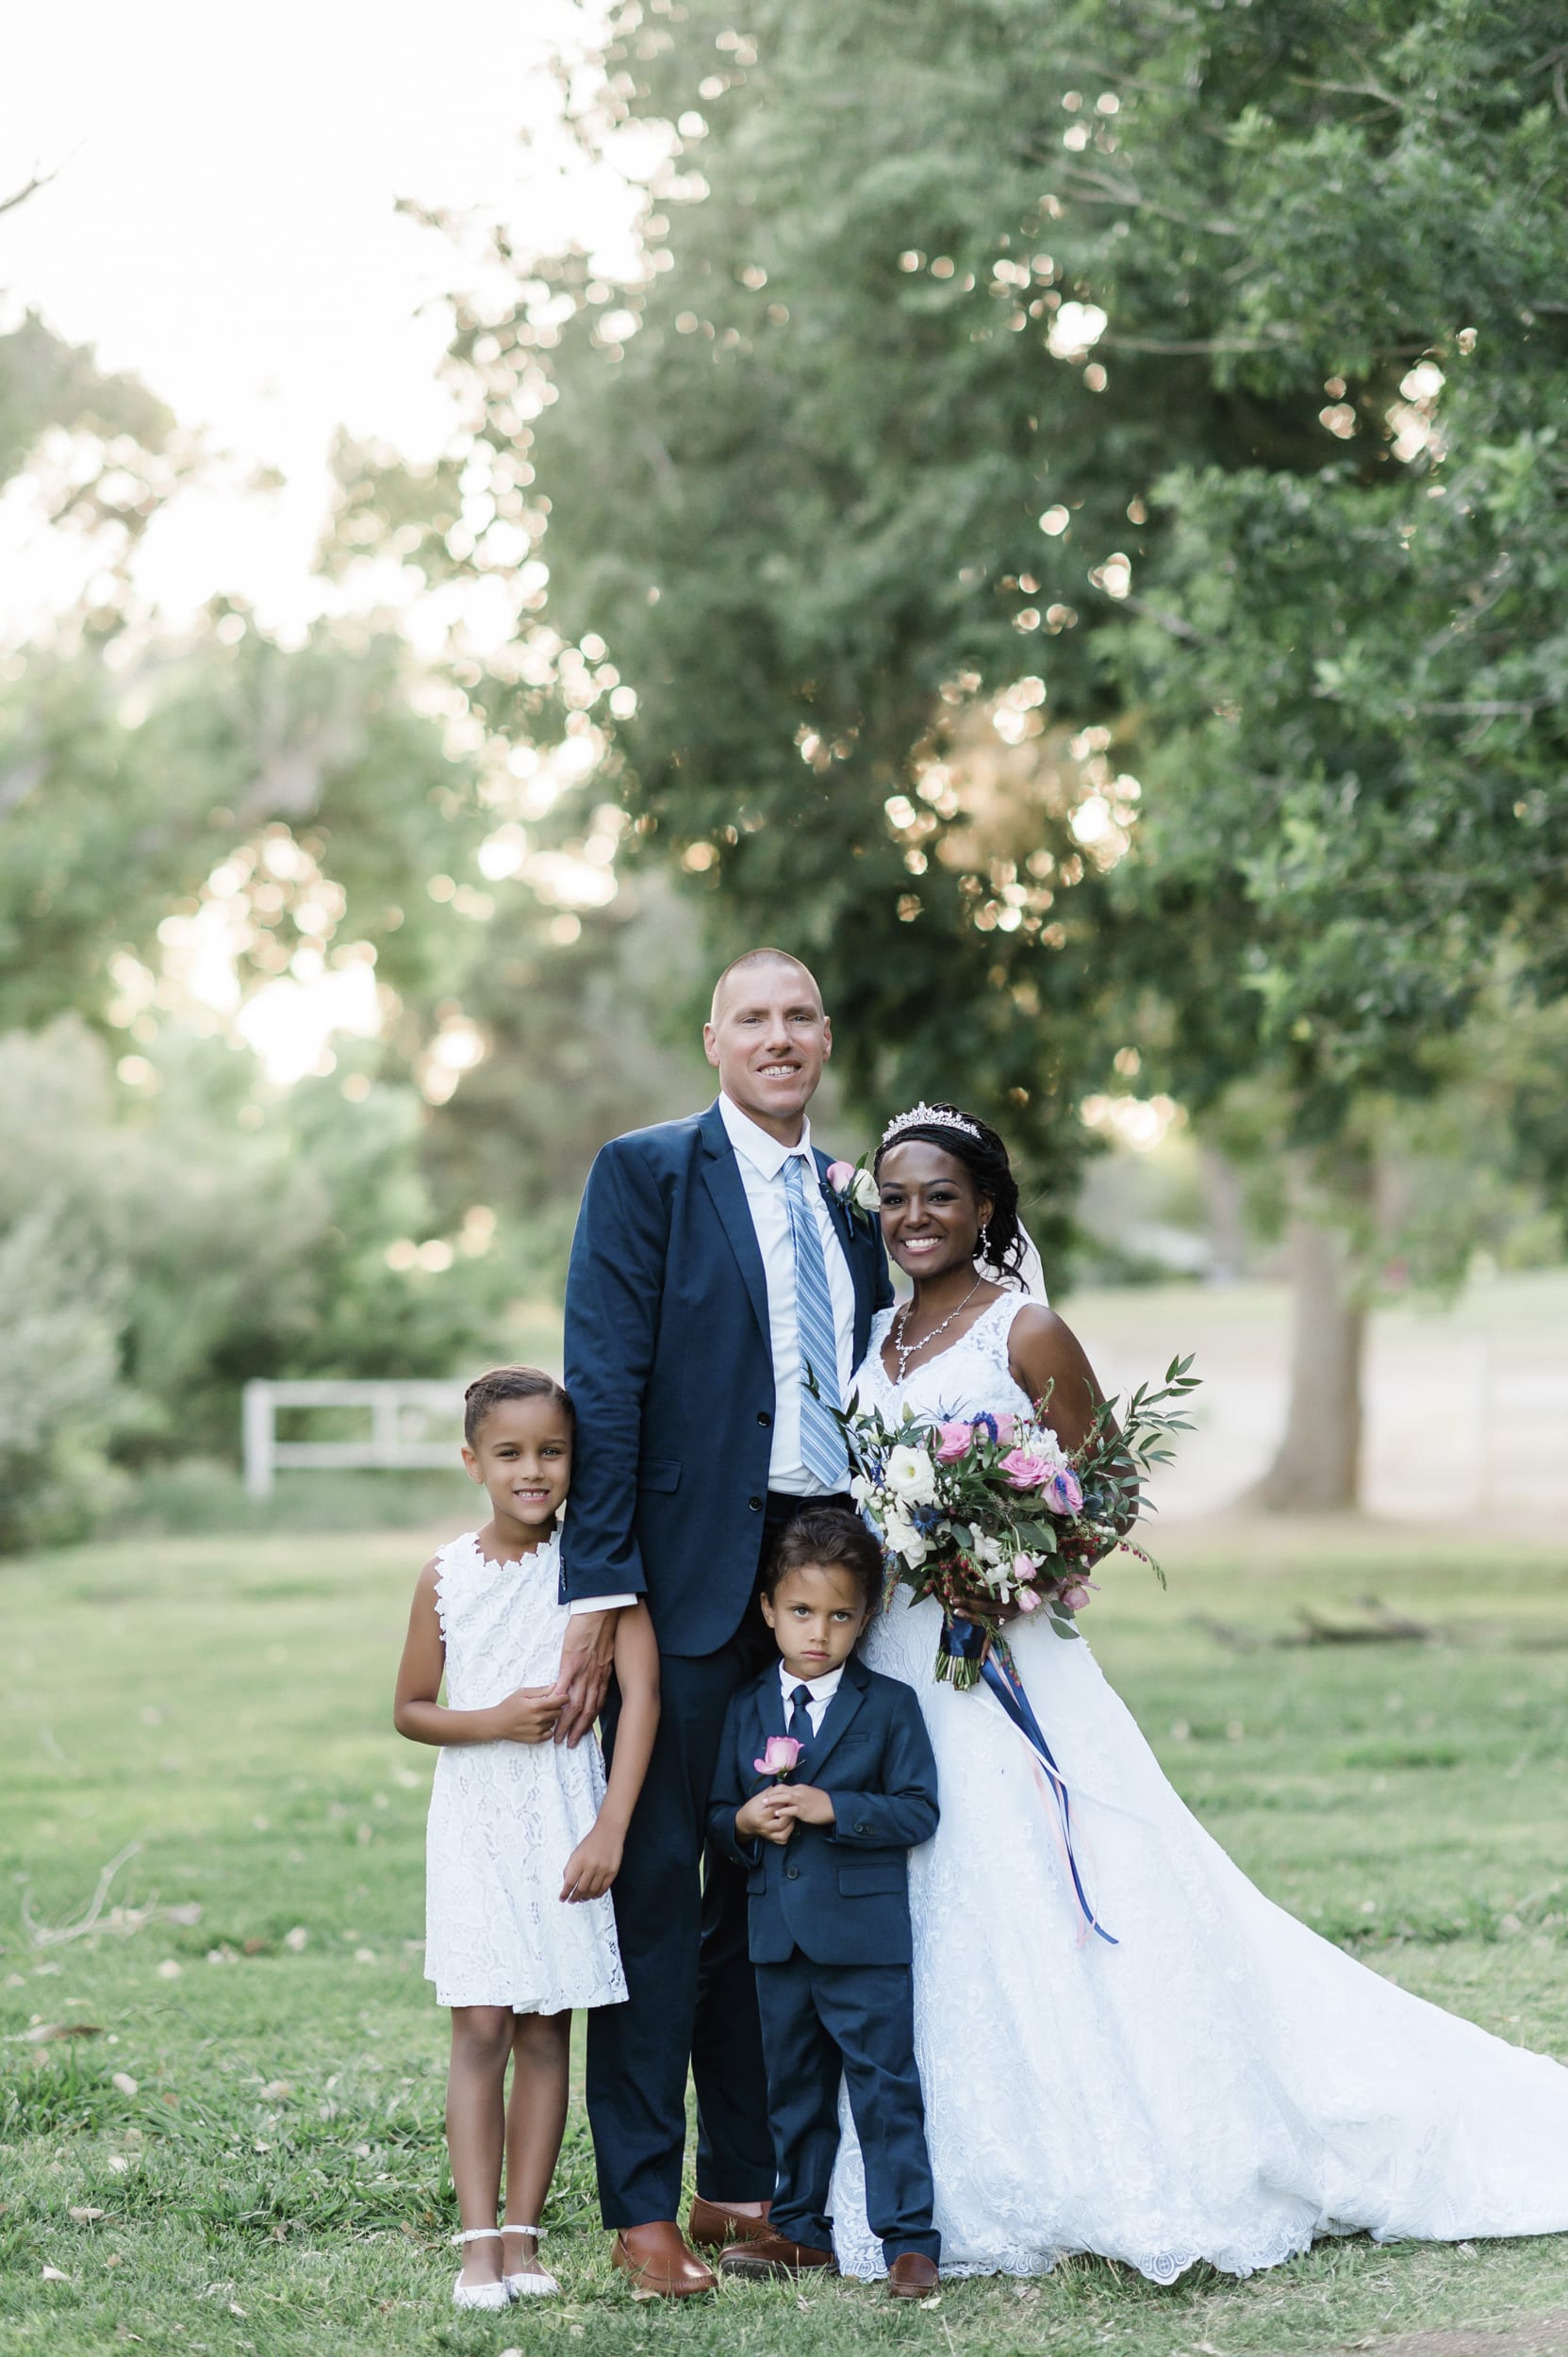 Latashia, Michael and family post at wedding.